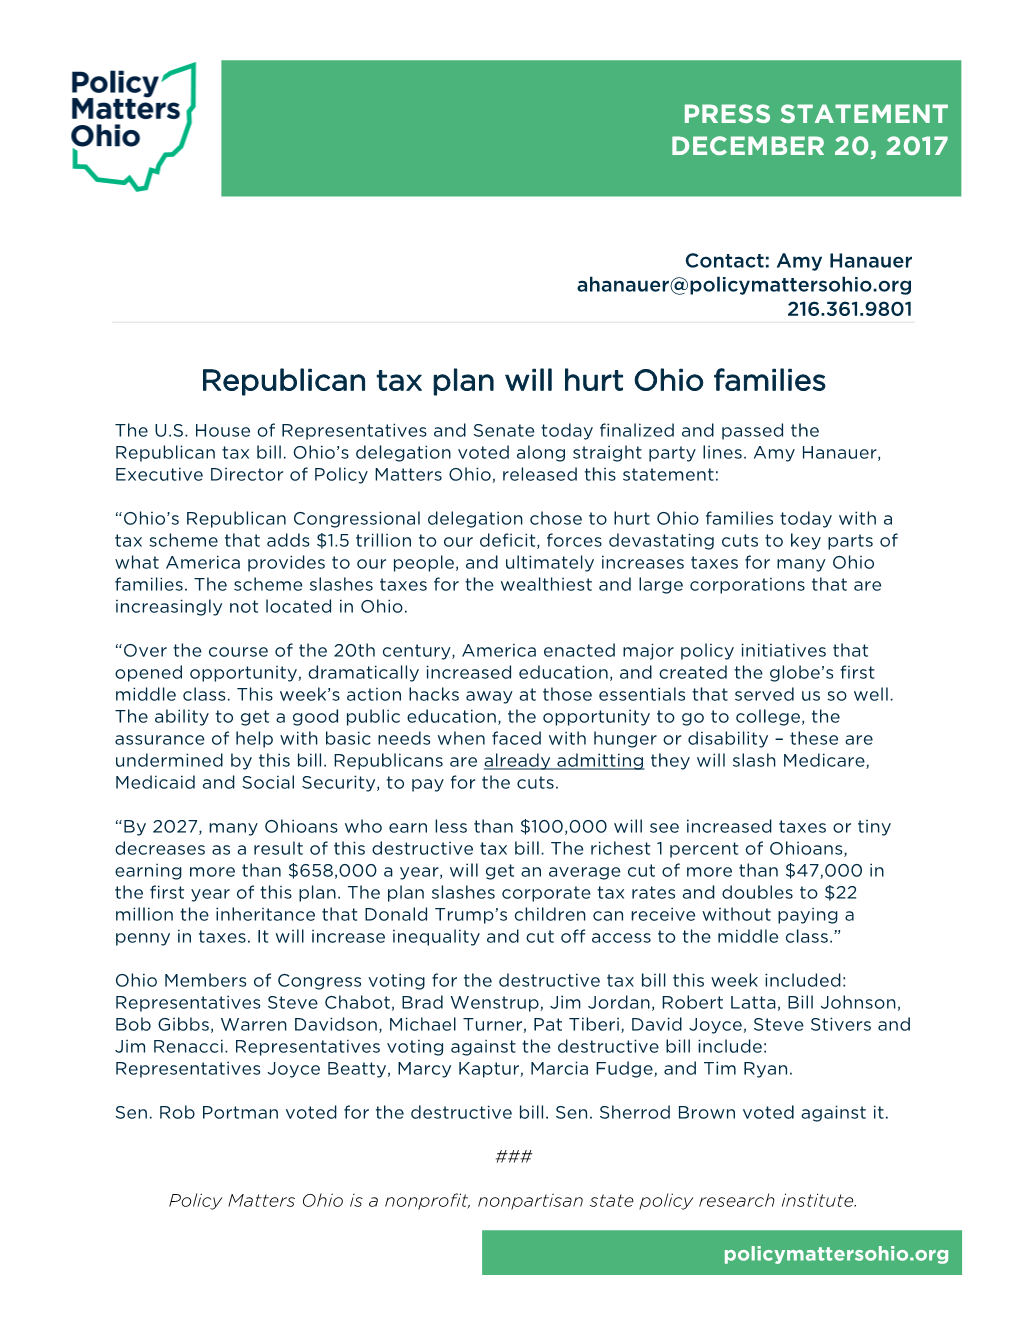 Republican Tax Plan Will Hurt Ohio Families